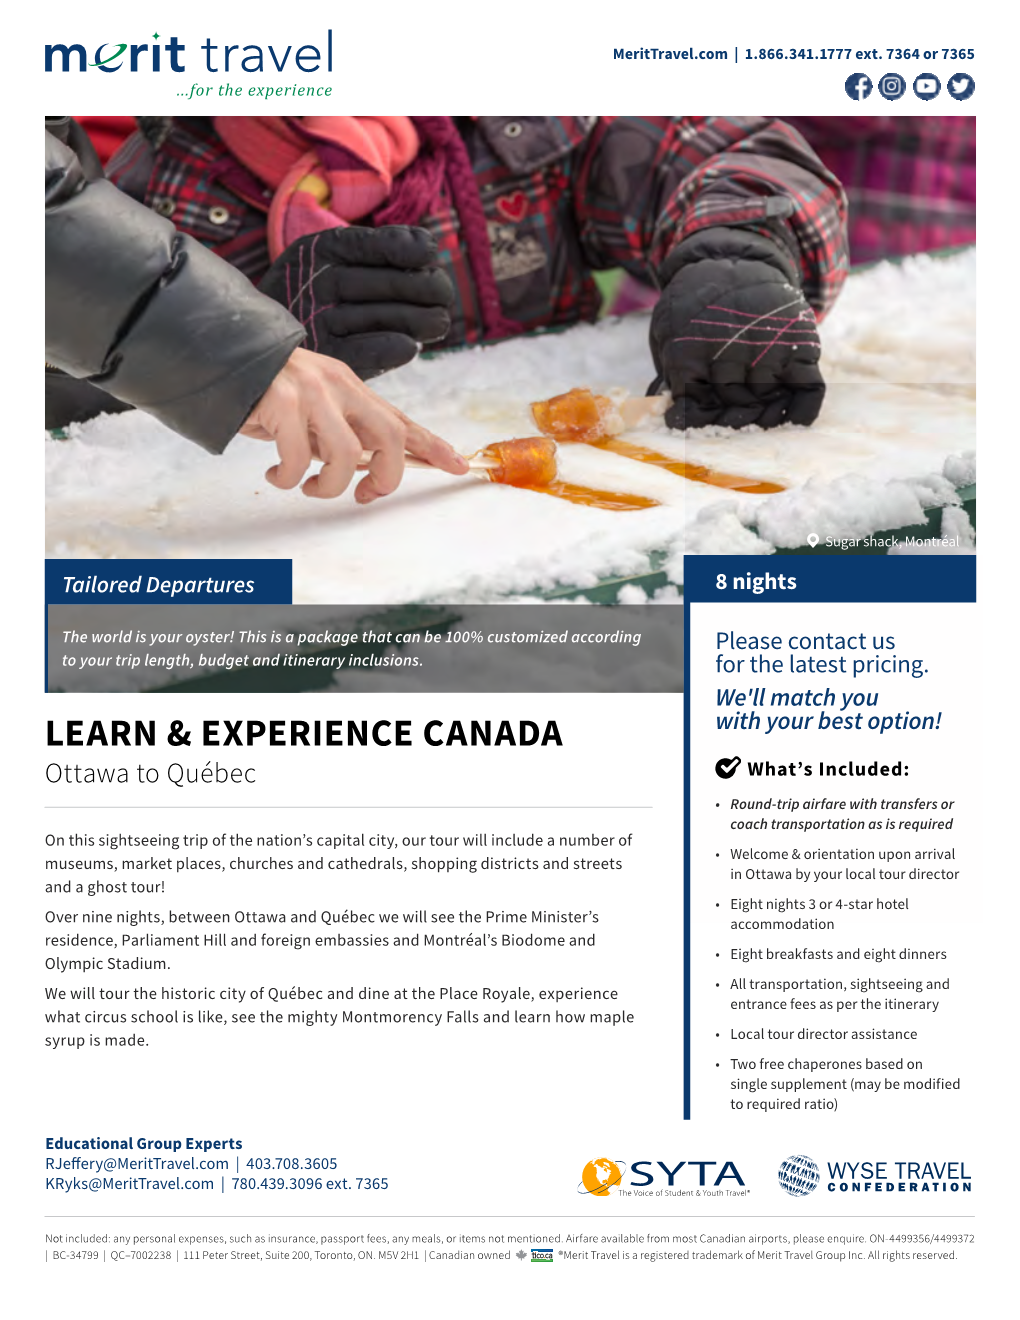 Learn & Experience Canada